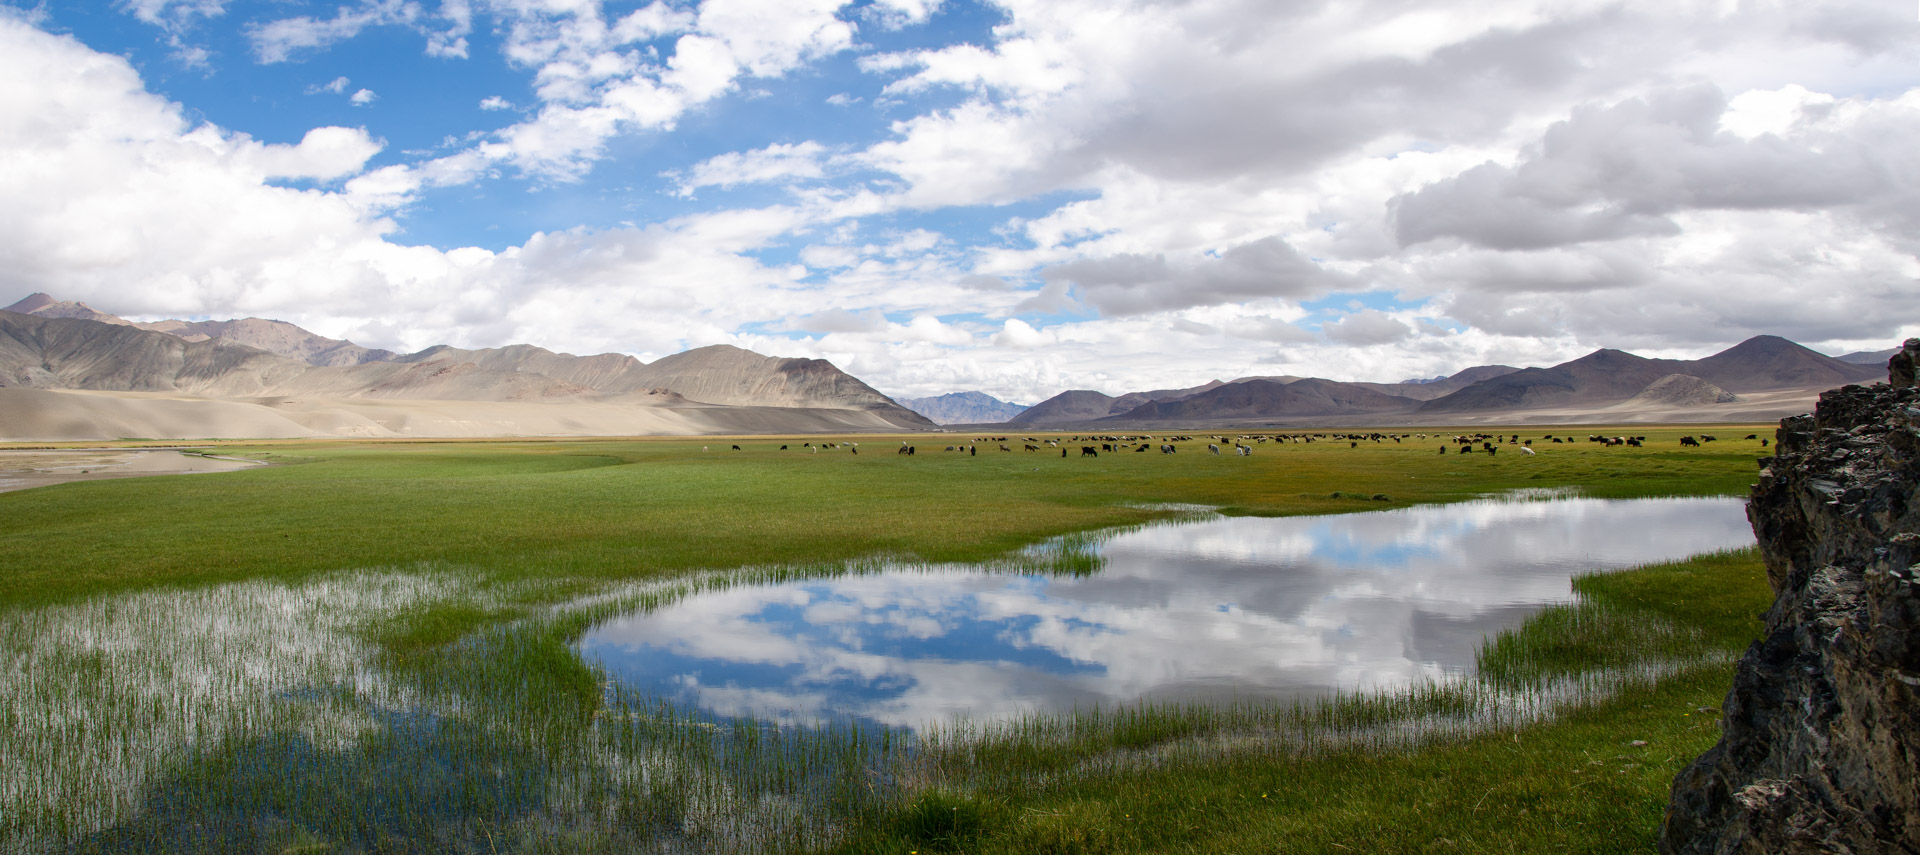 Pristine meadow in the Pamir region near Murghab